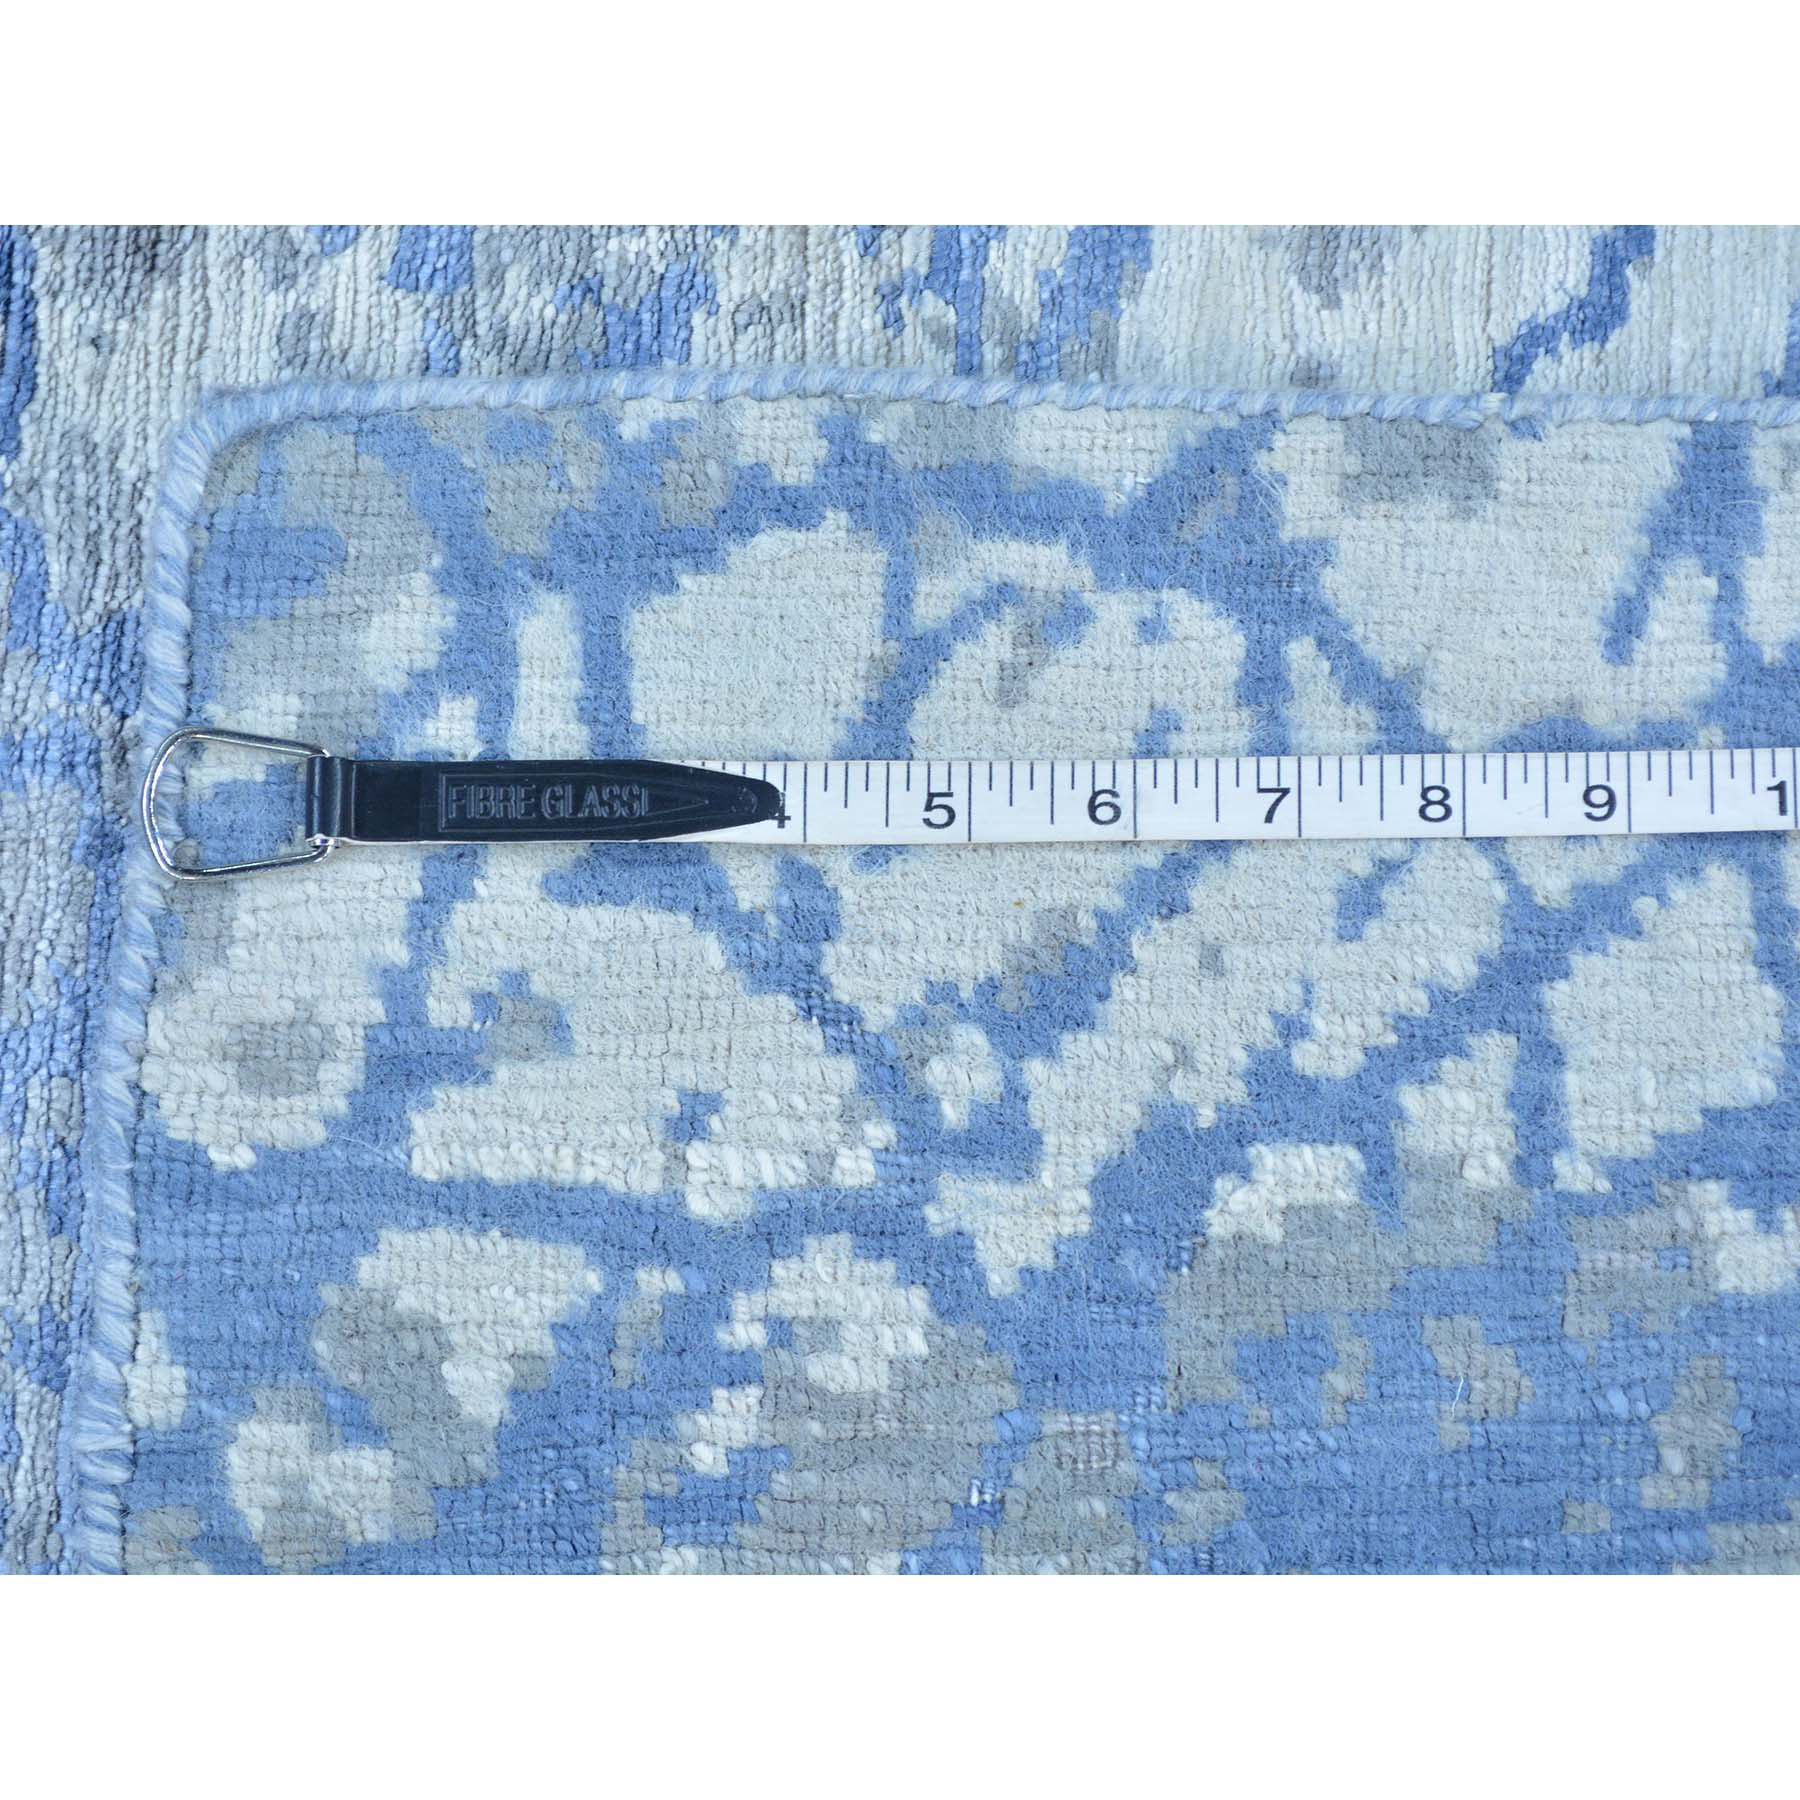 2- x 3- Abstract Design Modern Hand Knotted Art Silk Oriental Rug 